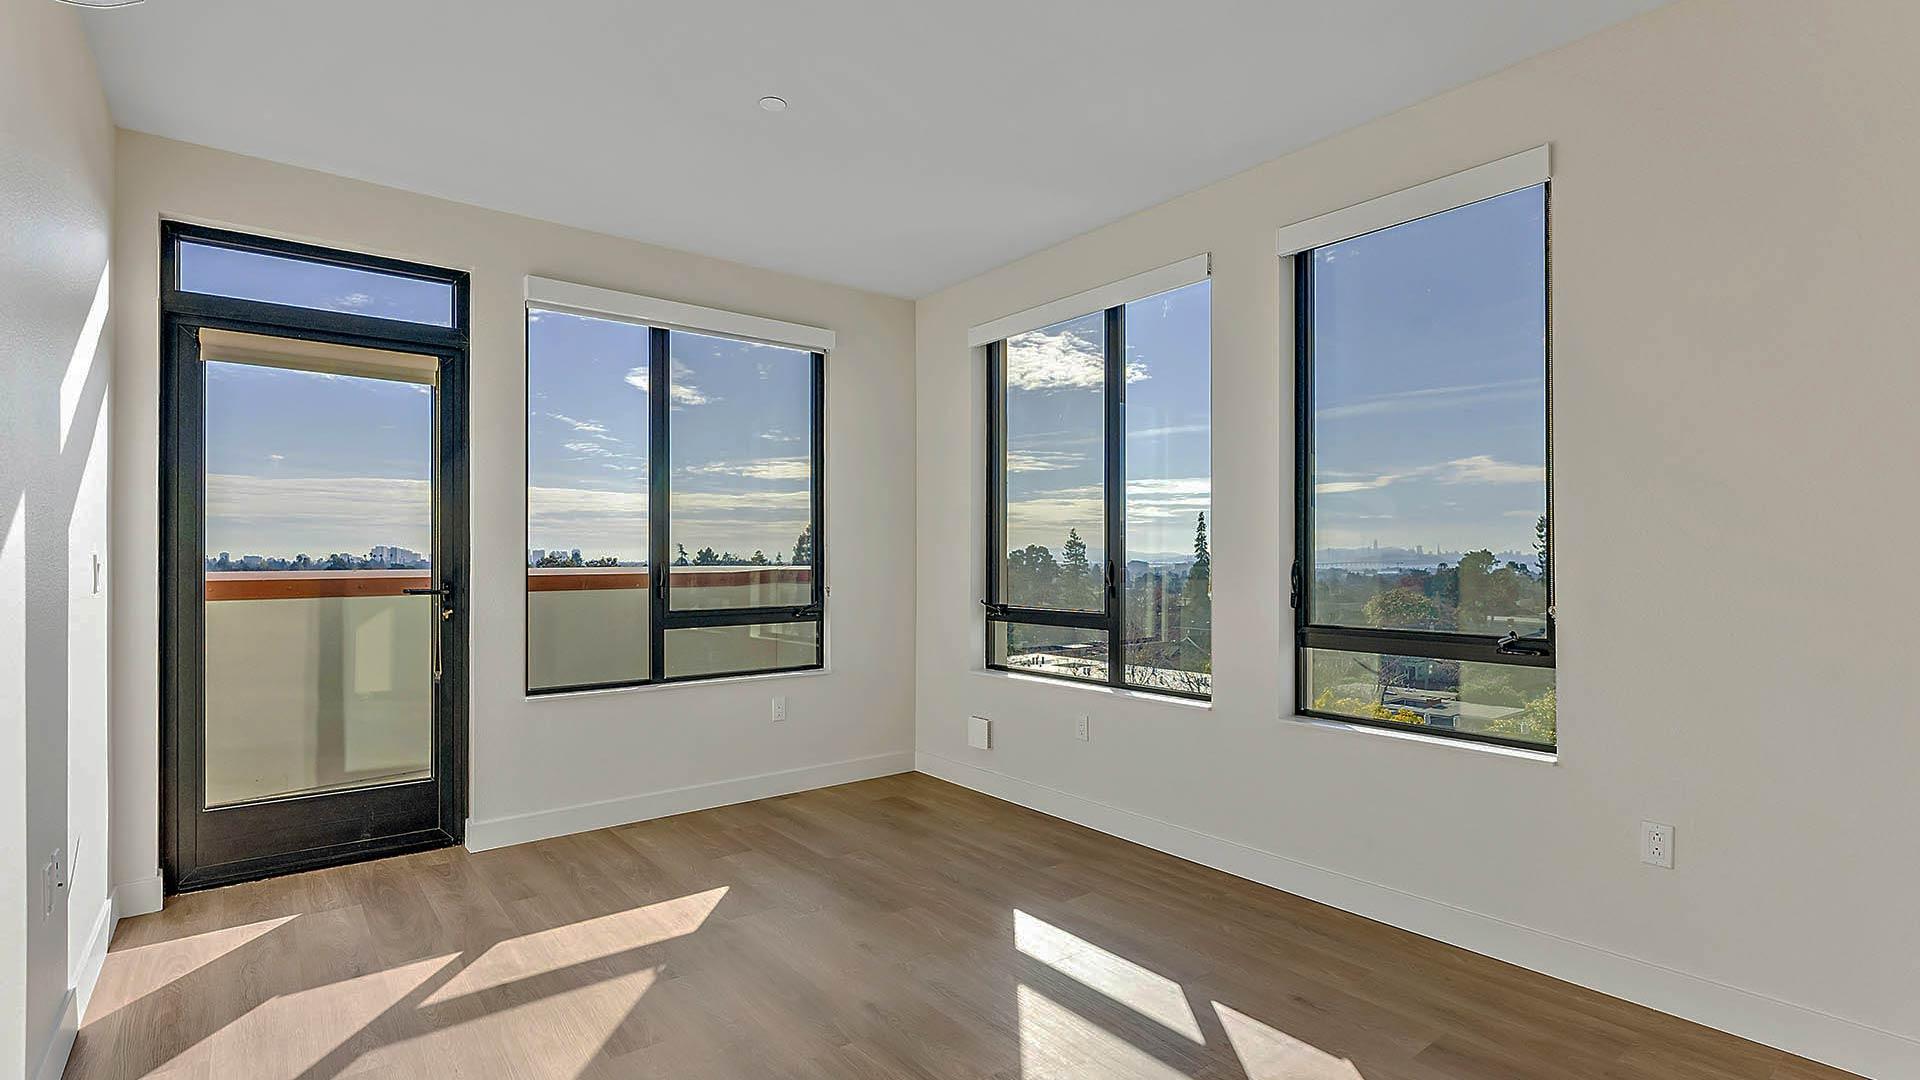 Blake apartments b5 floorplan livingroom view 2